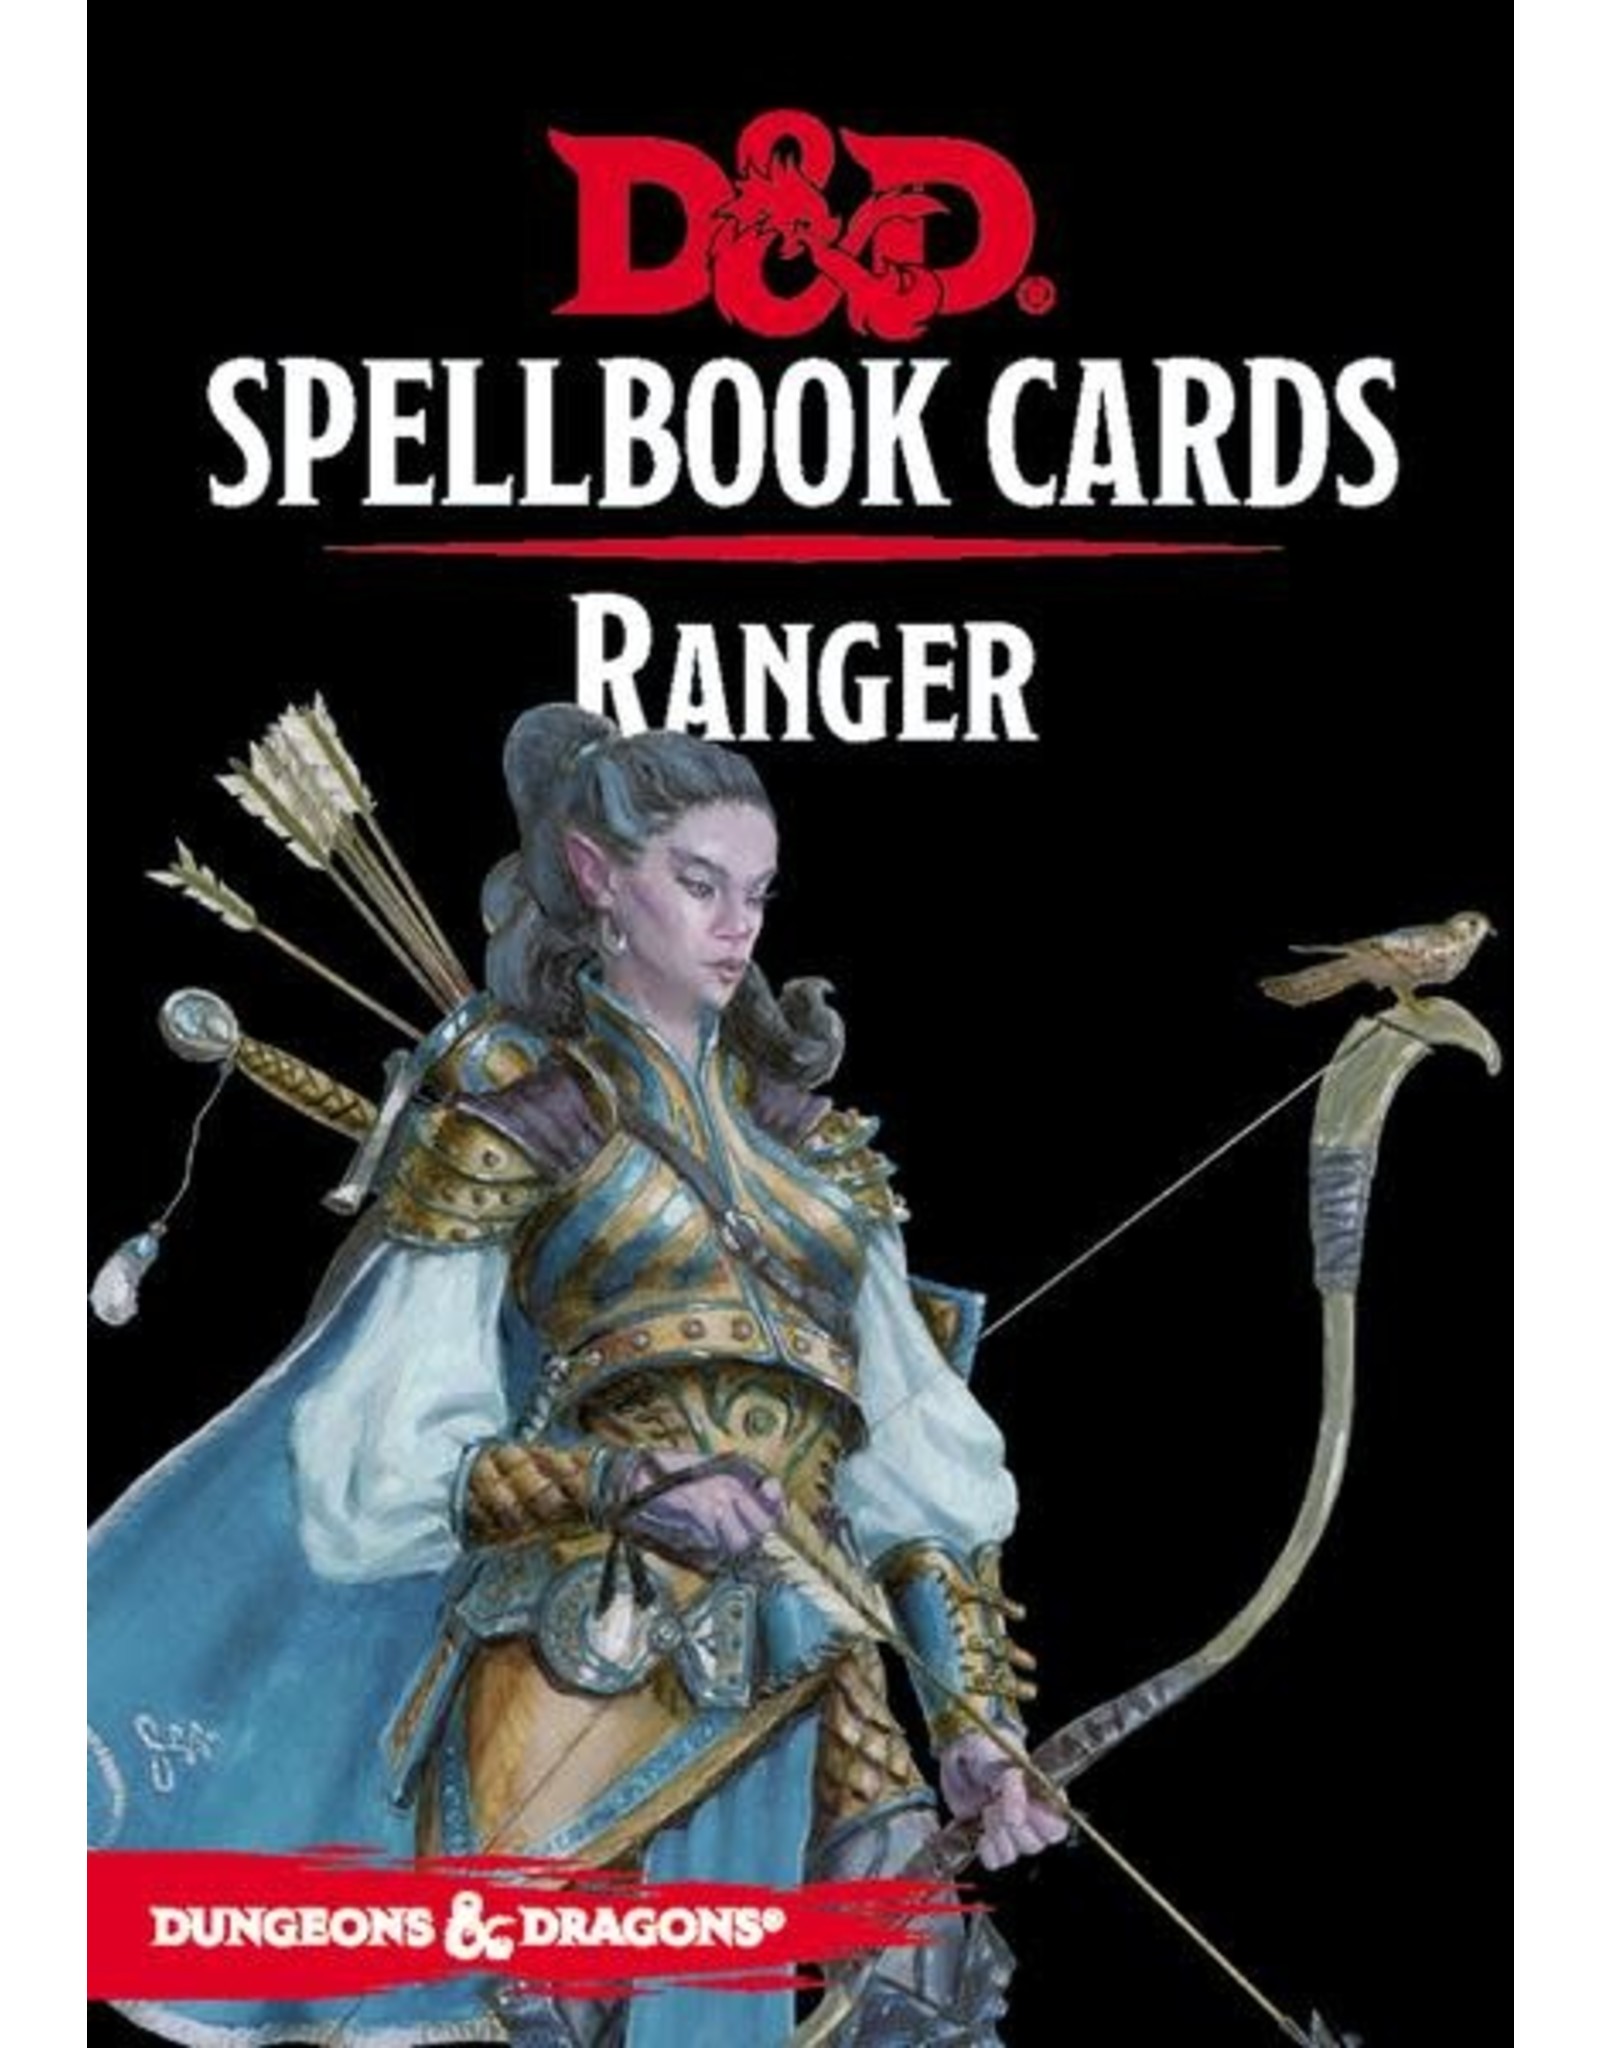 Spellbook Cards Ranger Deck Revised